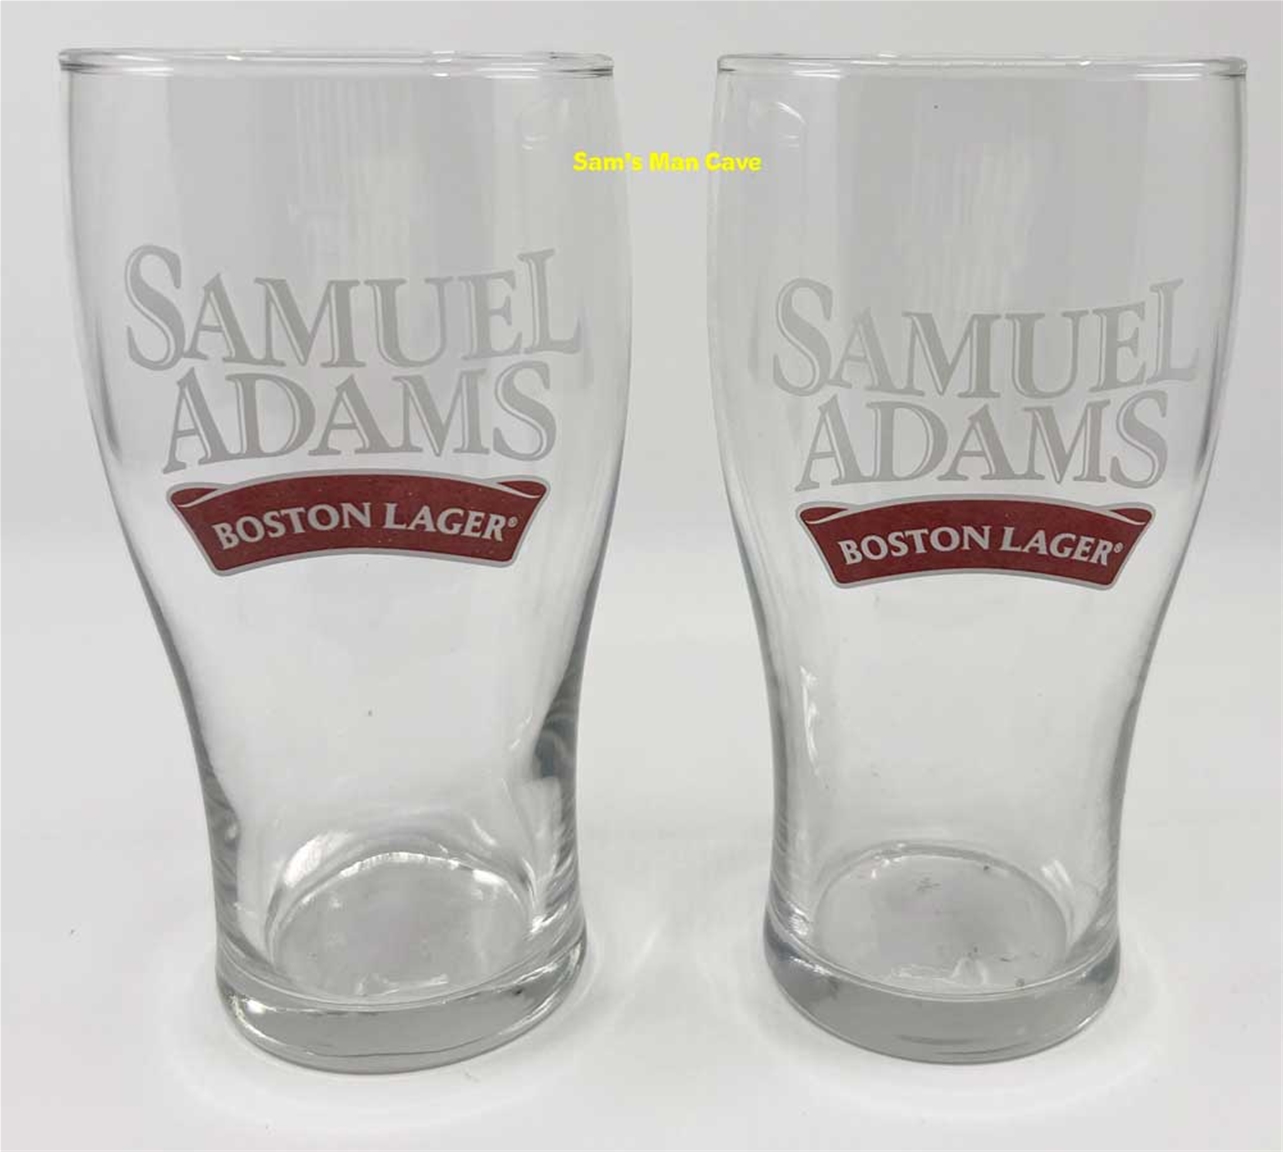 Samuel Adams Boston Lager Glass Set of Two